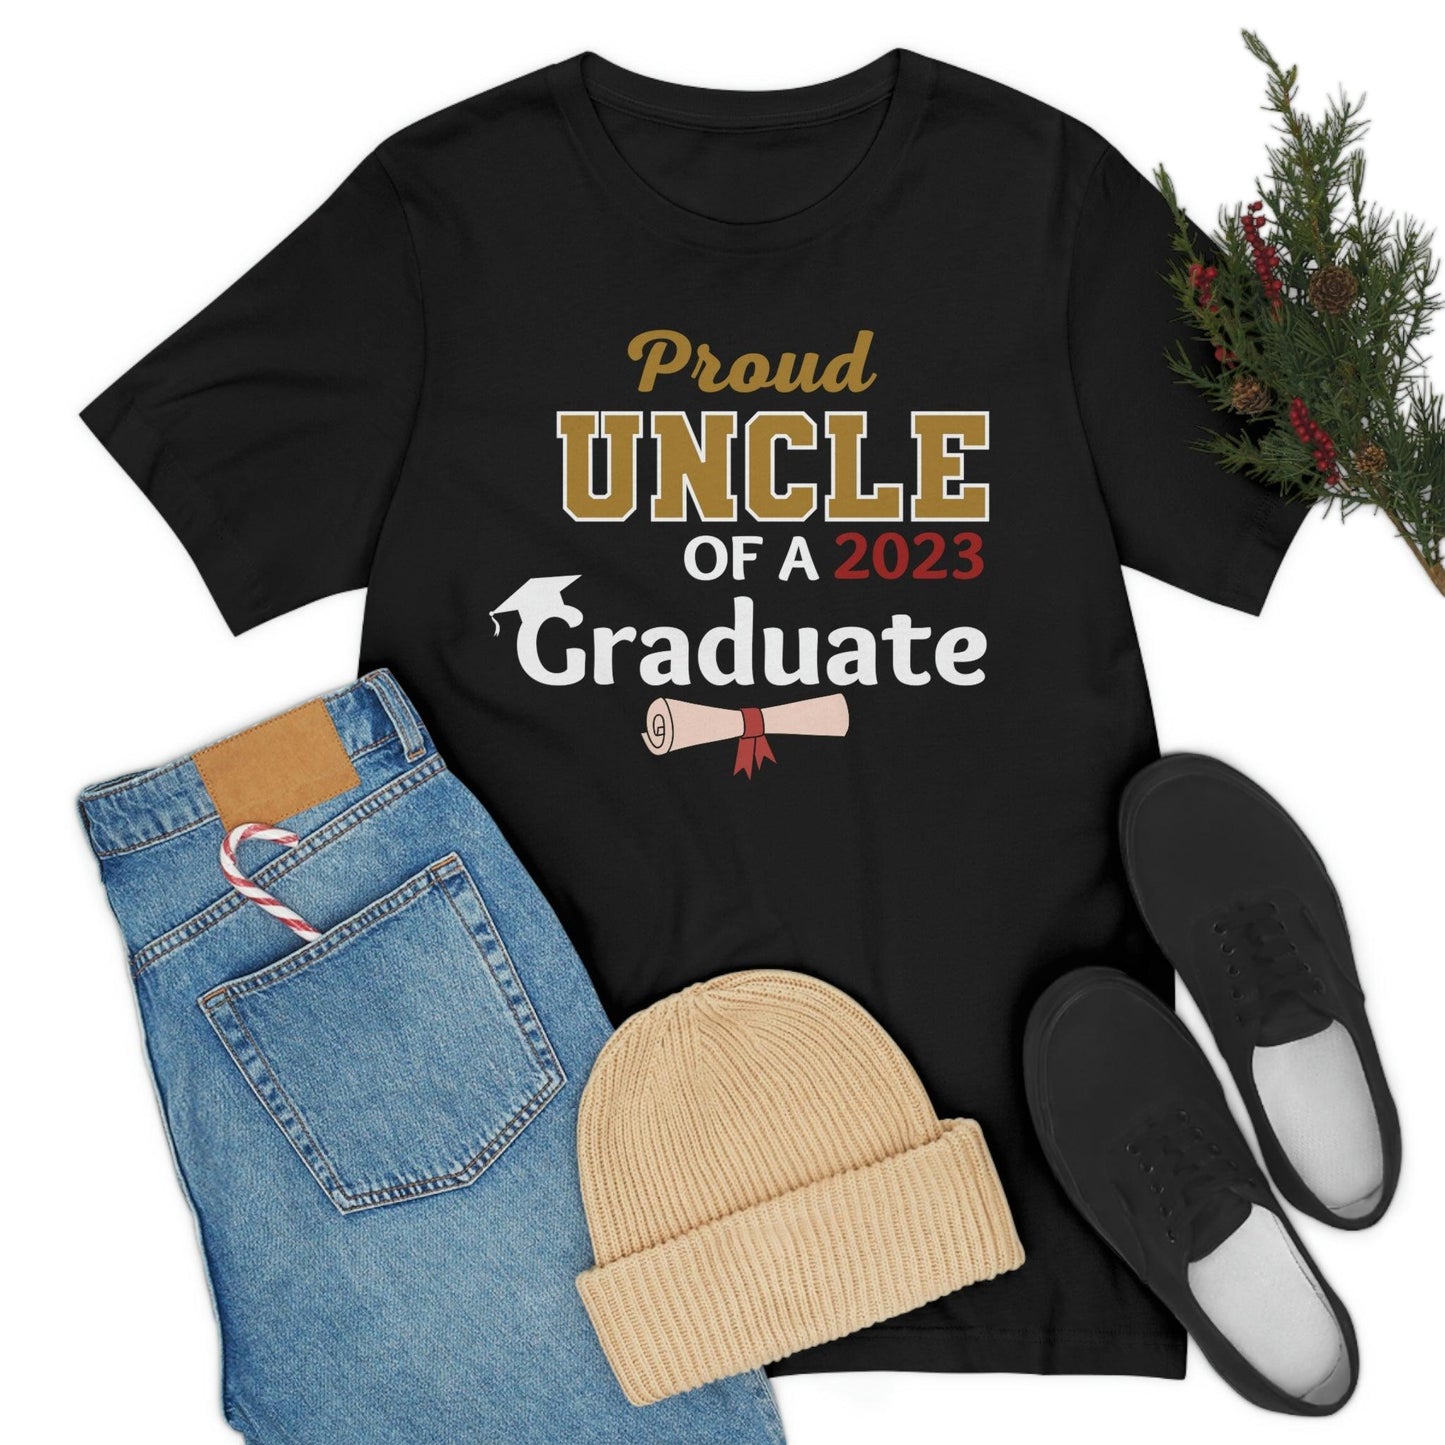 Proud Uncle of a Graduate shirt - Graduation shirt - Graduation gift